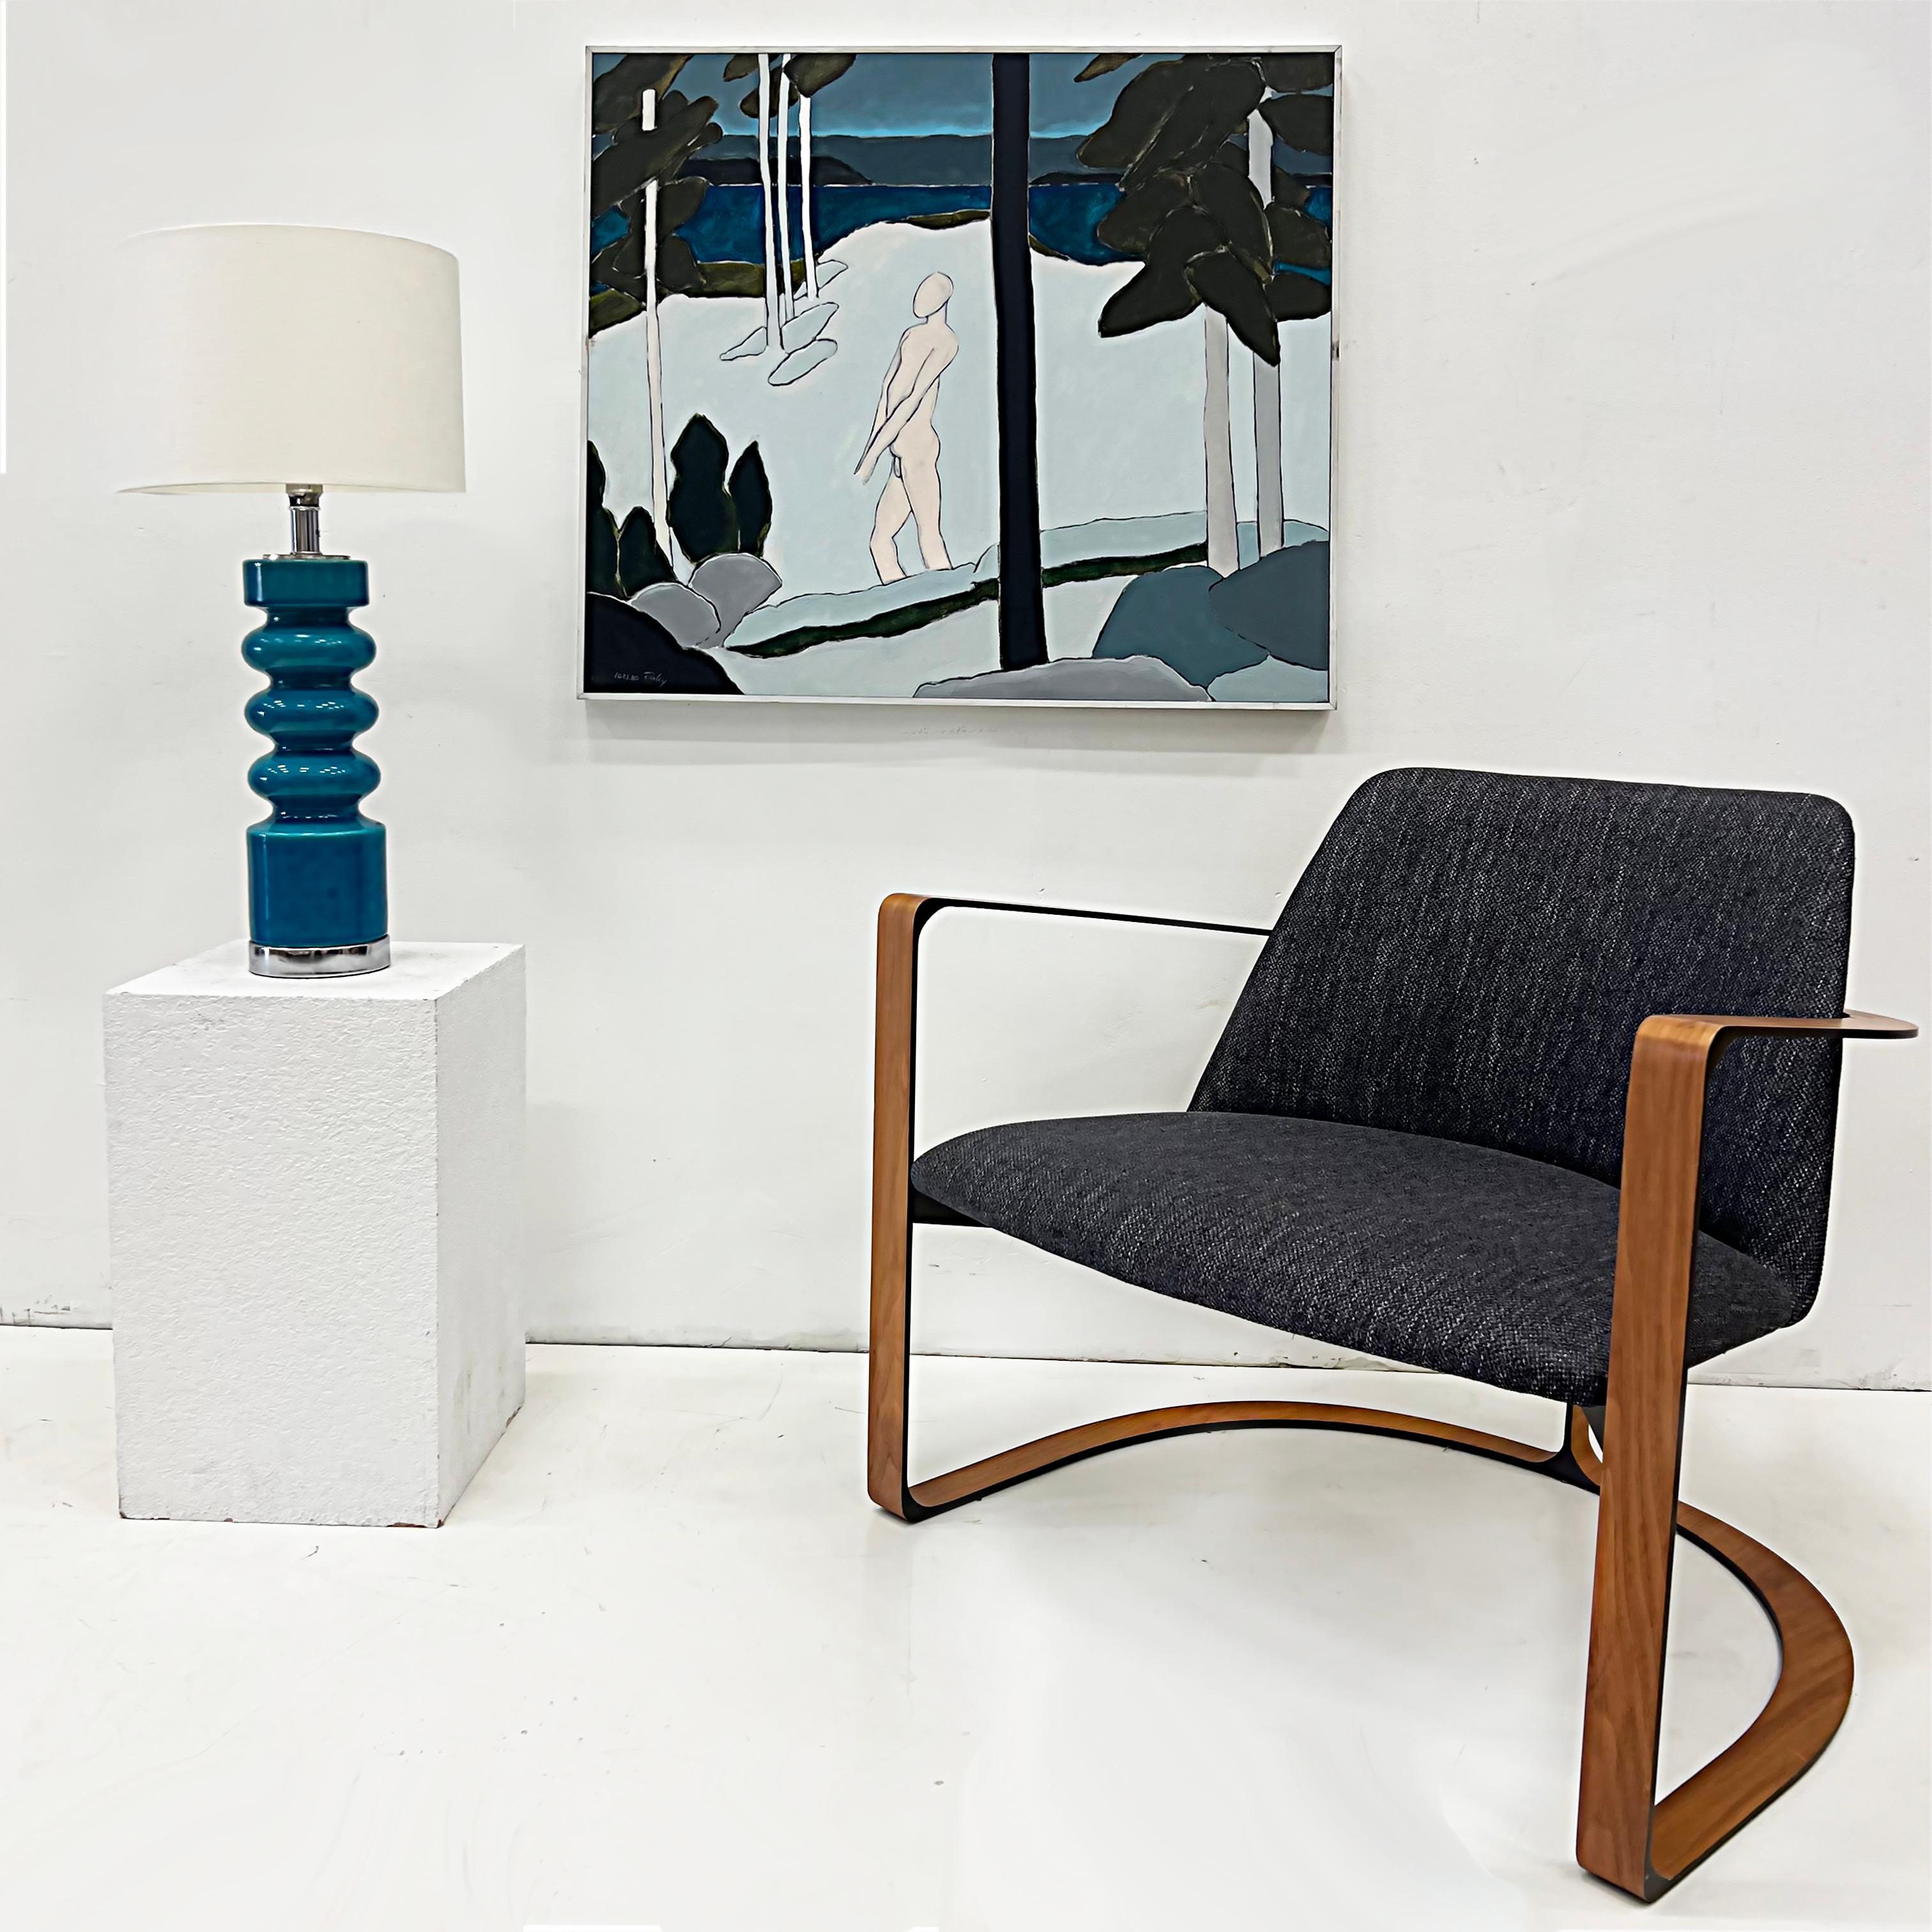 Modloft Modern John Vesey dark shadow lounge armchair.

Offered for sale is a John Vesey 